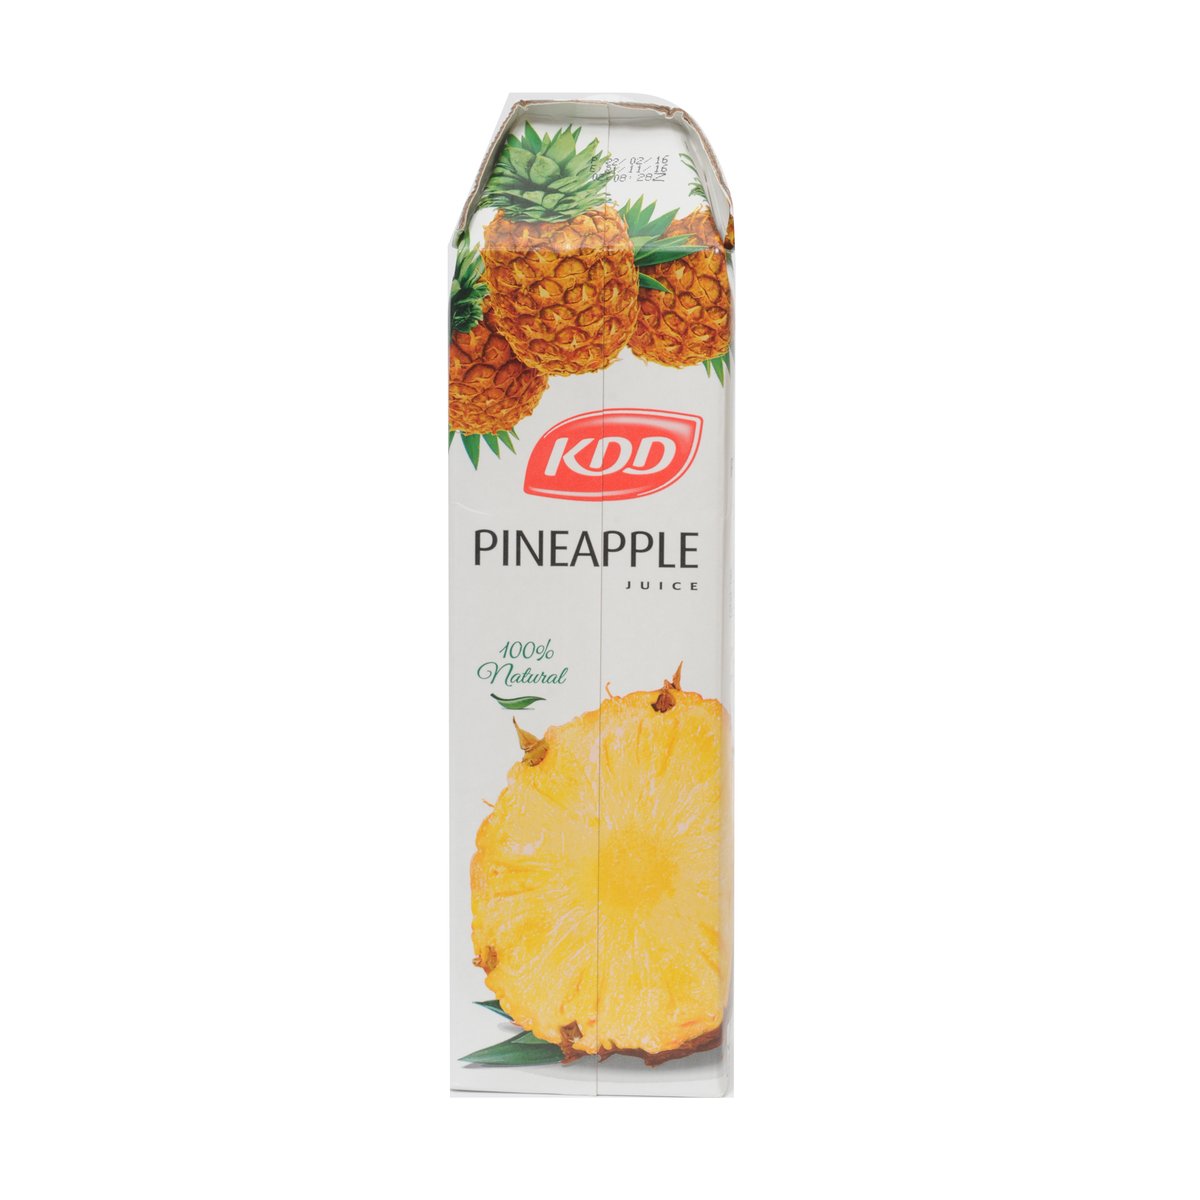 KDD Pineapple Juice 1Litre x 4 Pieces